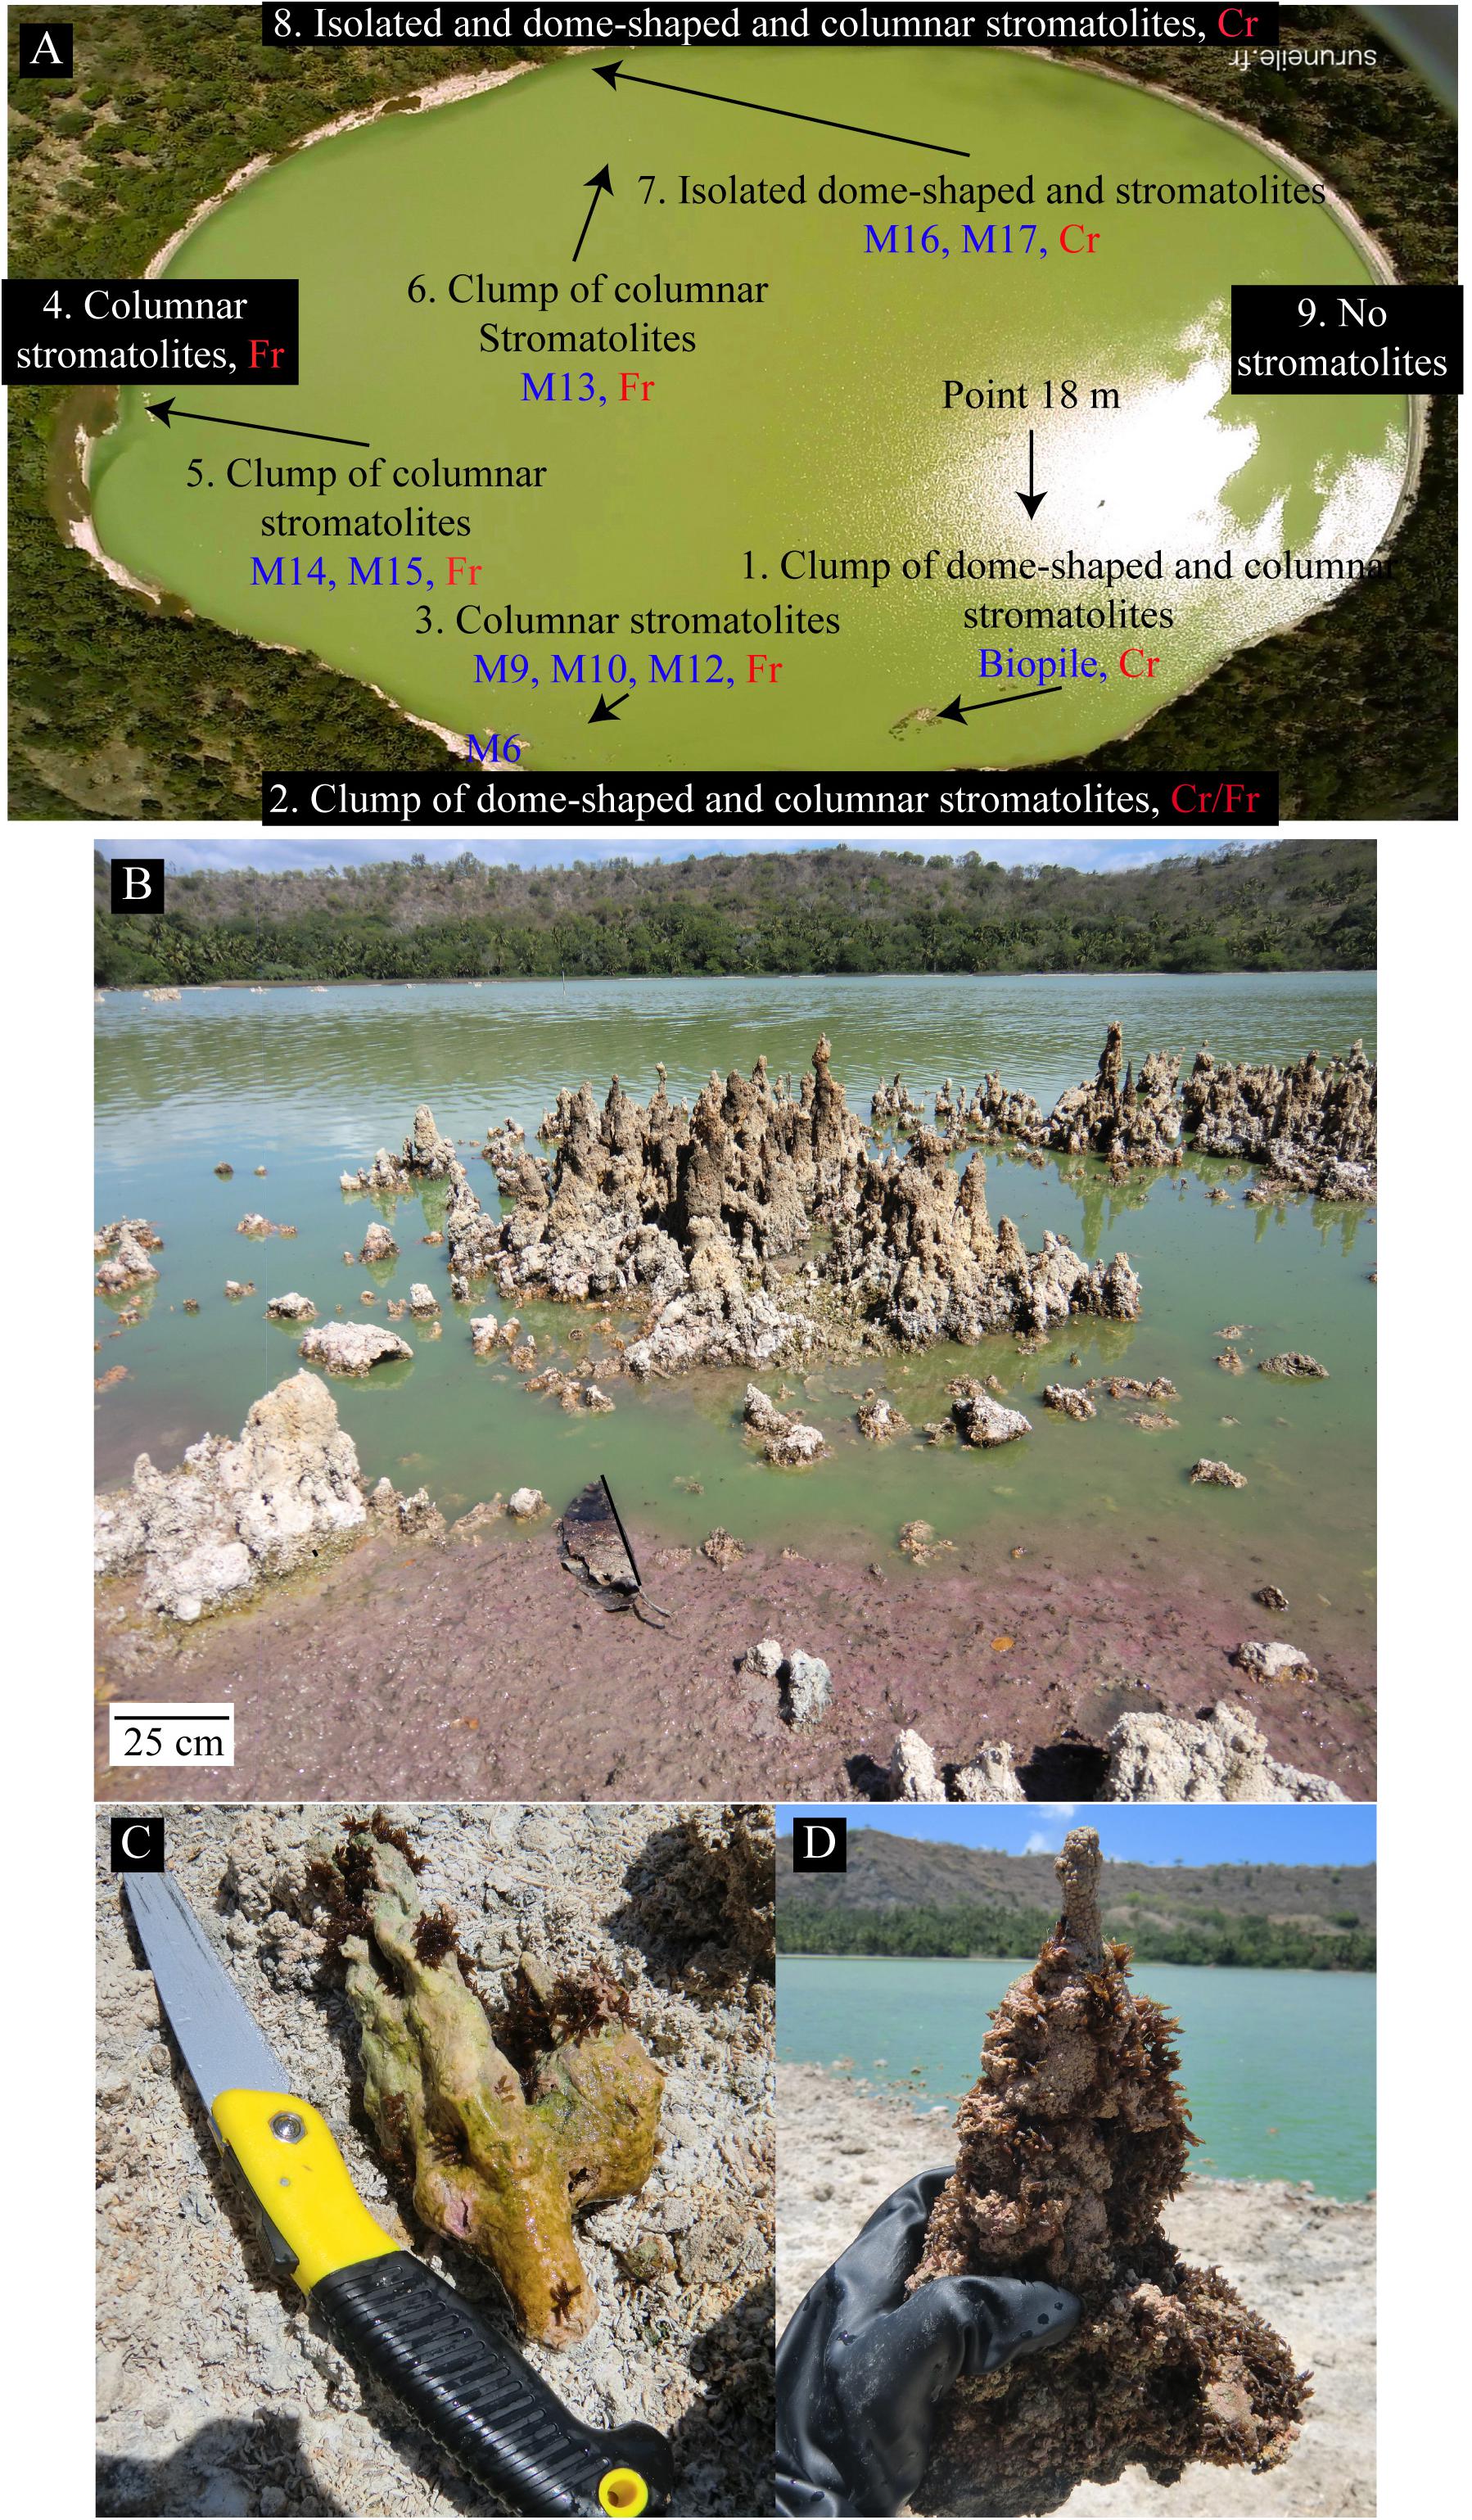 Stromatolite-like deposits. Microfabric details of the